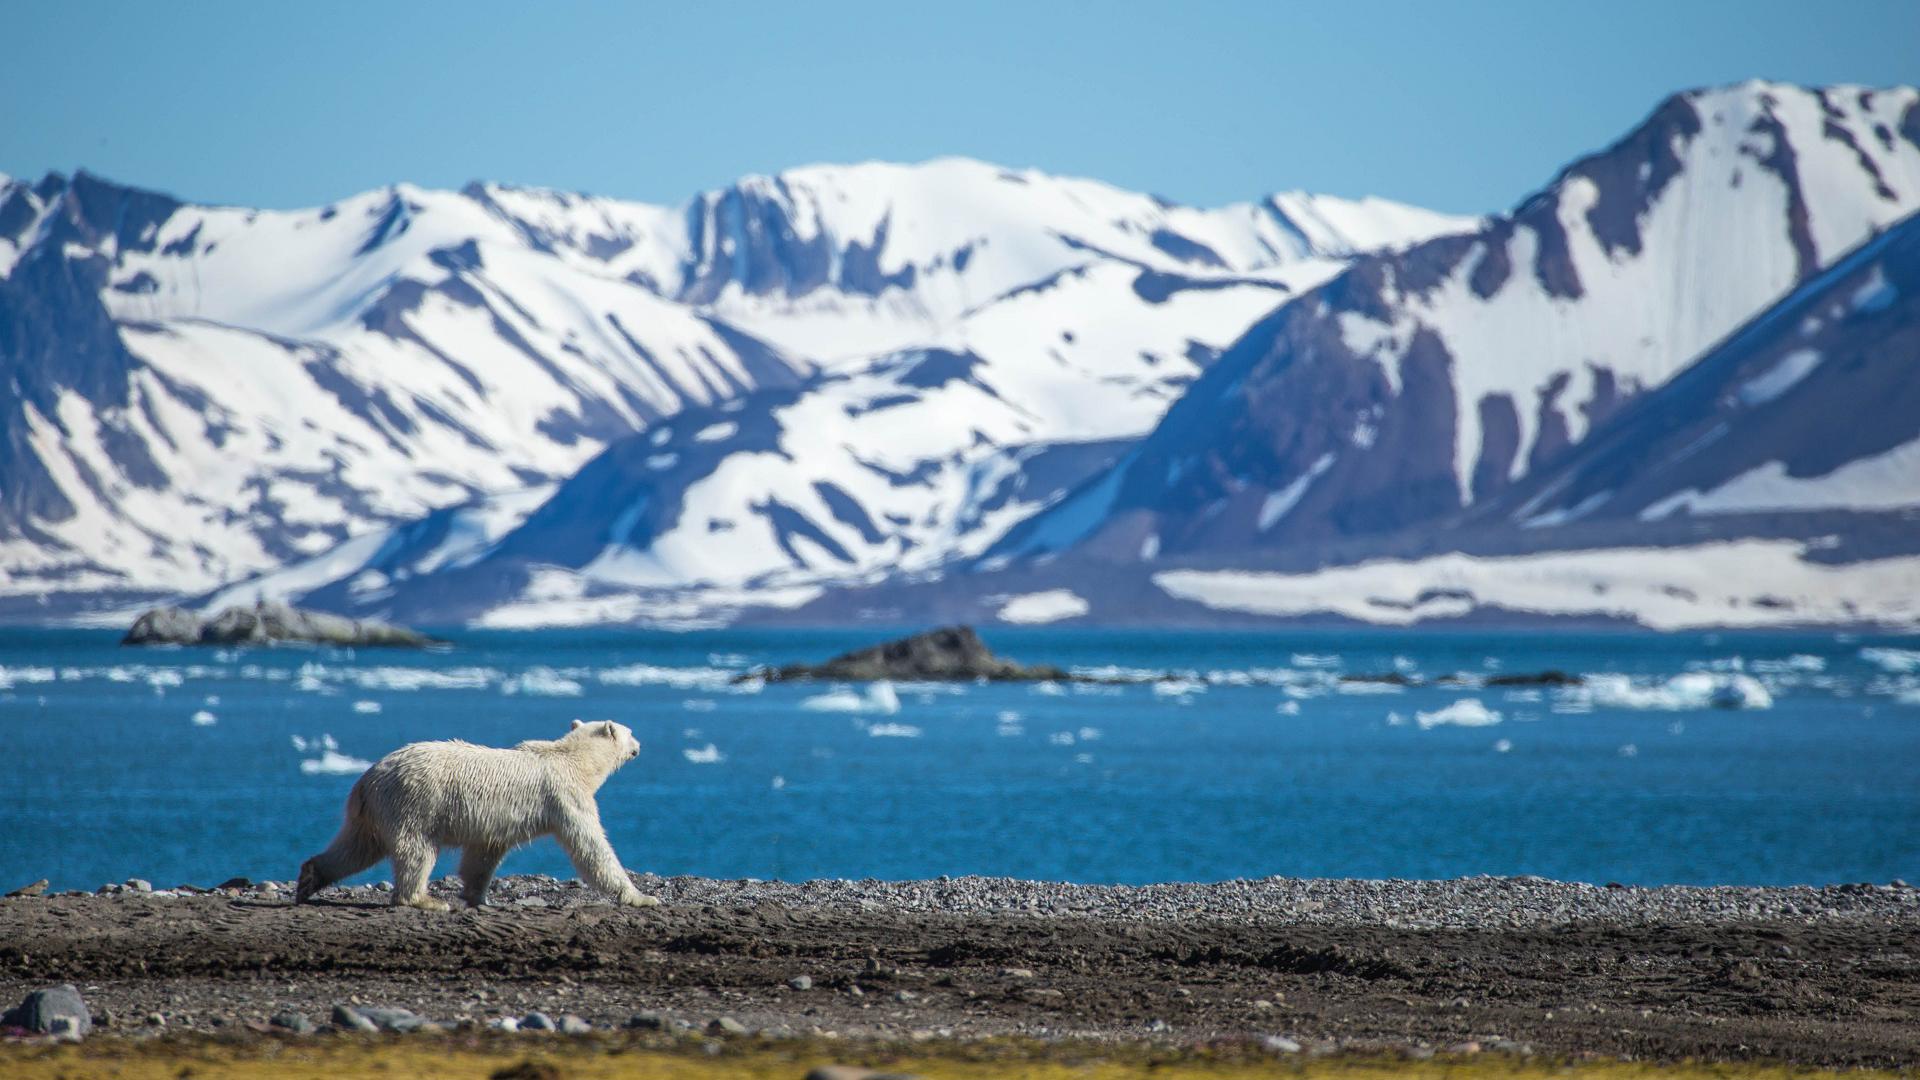 Polar bear, mountains and melting snow